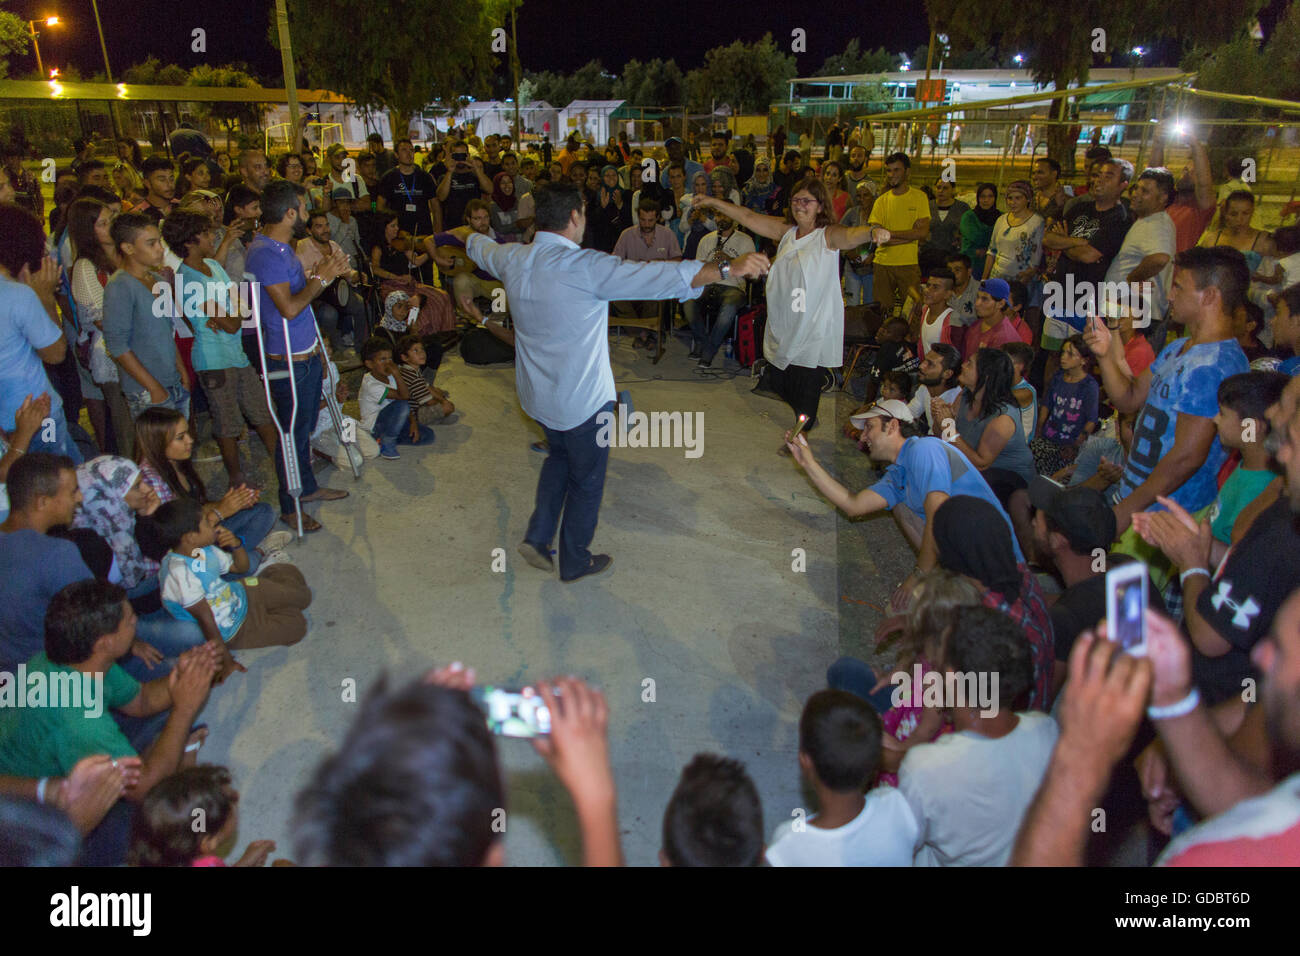 Syrian, Iraqi and Afghan refugees celebrate Eid, the end of Ramadan in Kara Tebe refugee camp, Greece Stock Photo